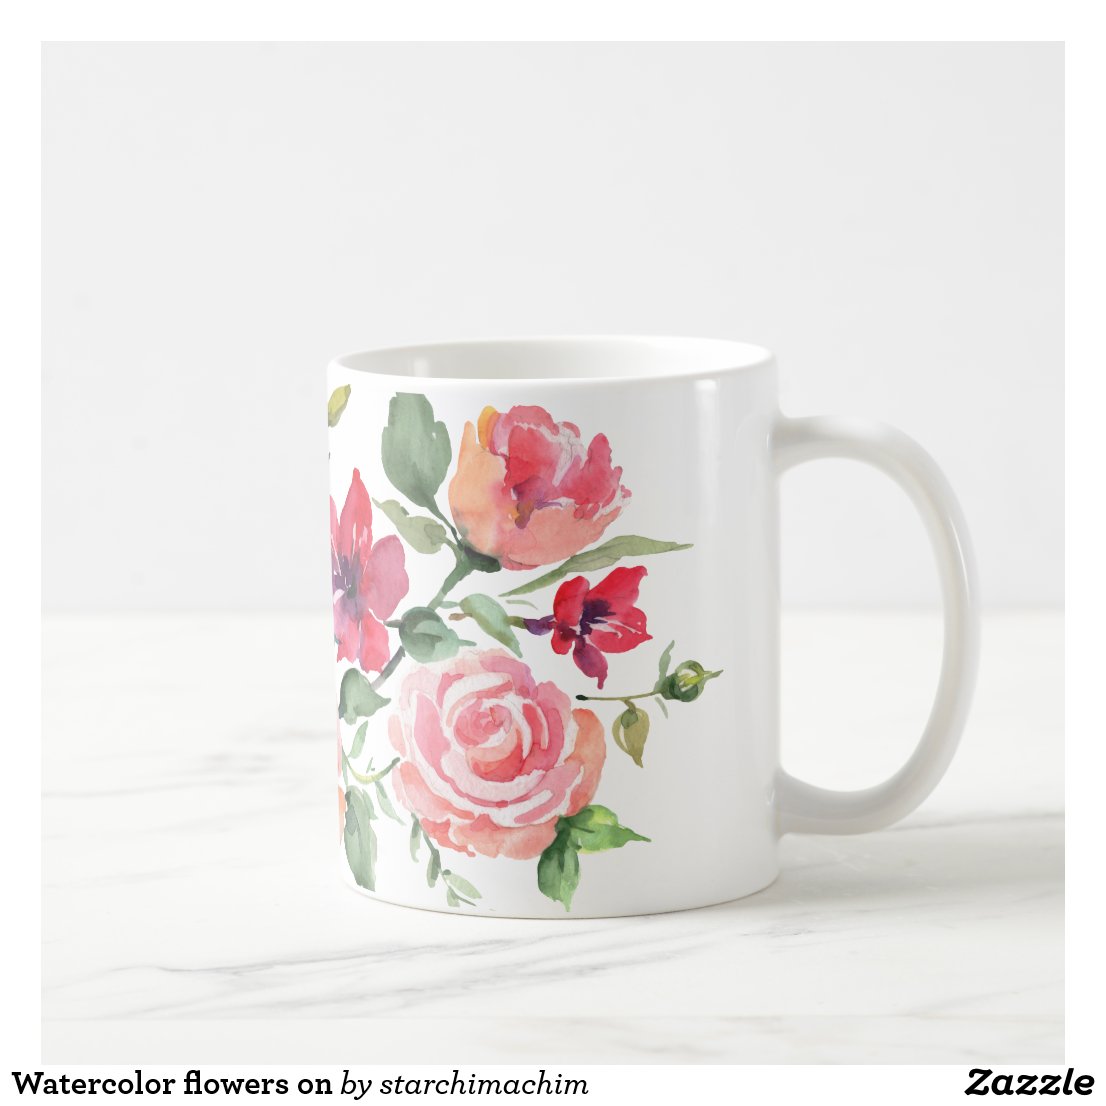 Watercolor flowers on coffee mug